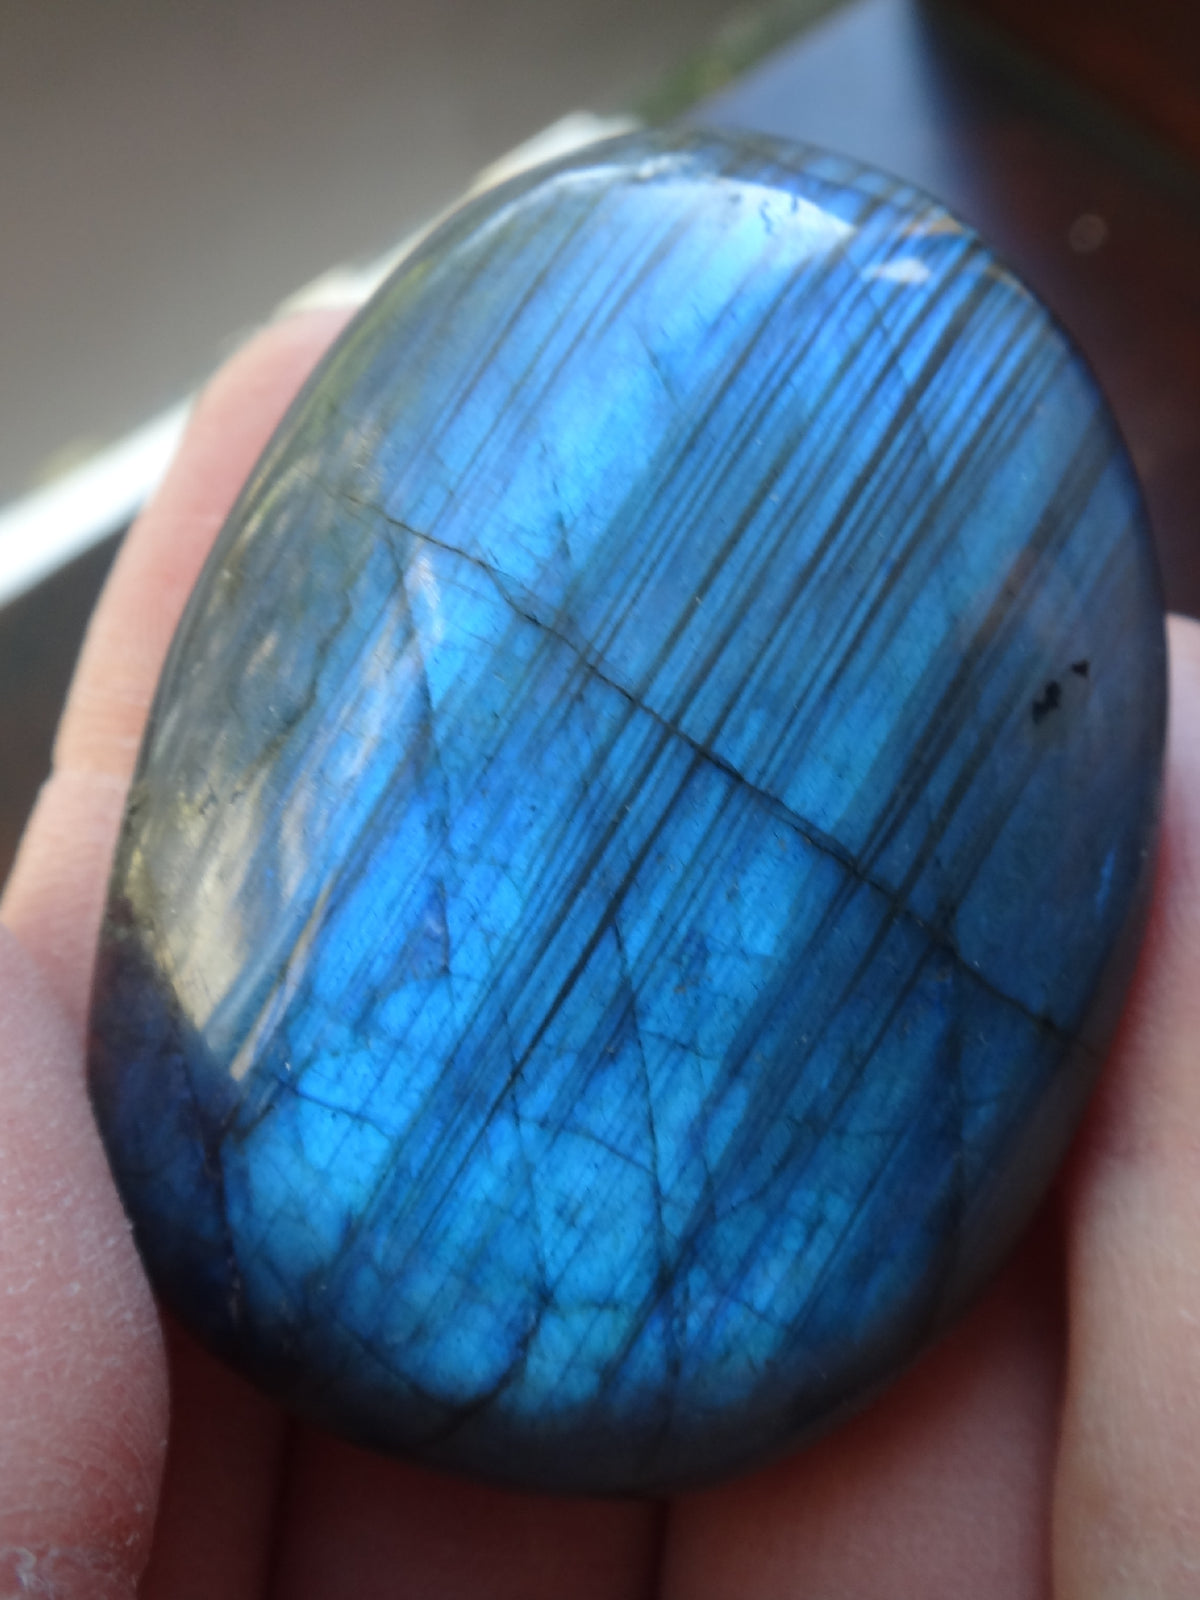 a labradorite palmstone held in a hand. The piece has blue labradorescence. It is showing distinct lamella twinning